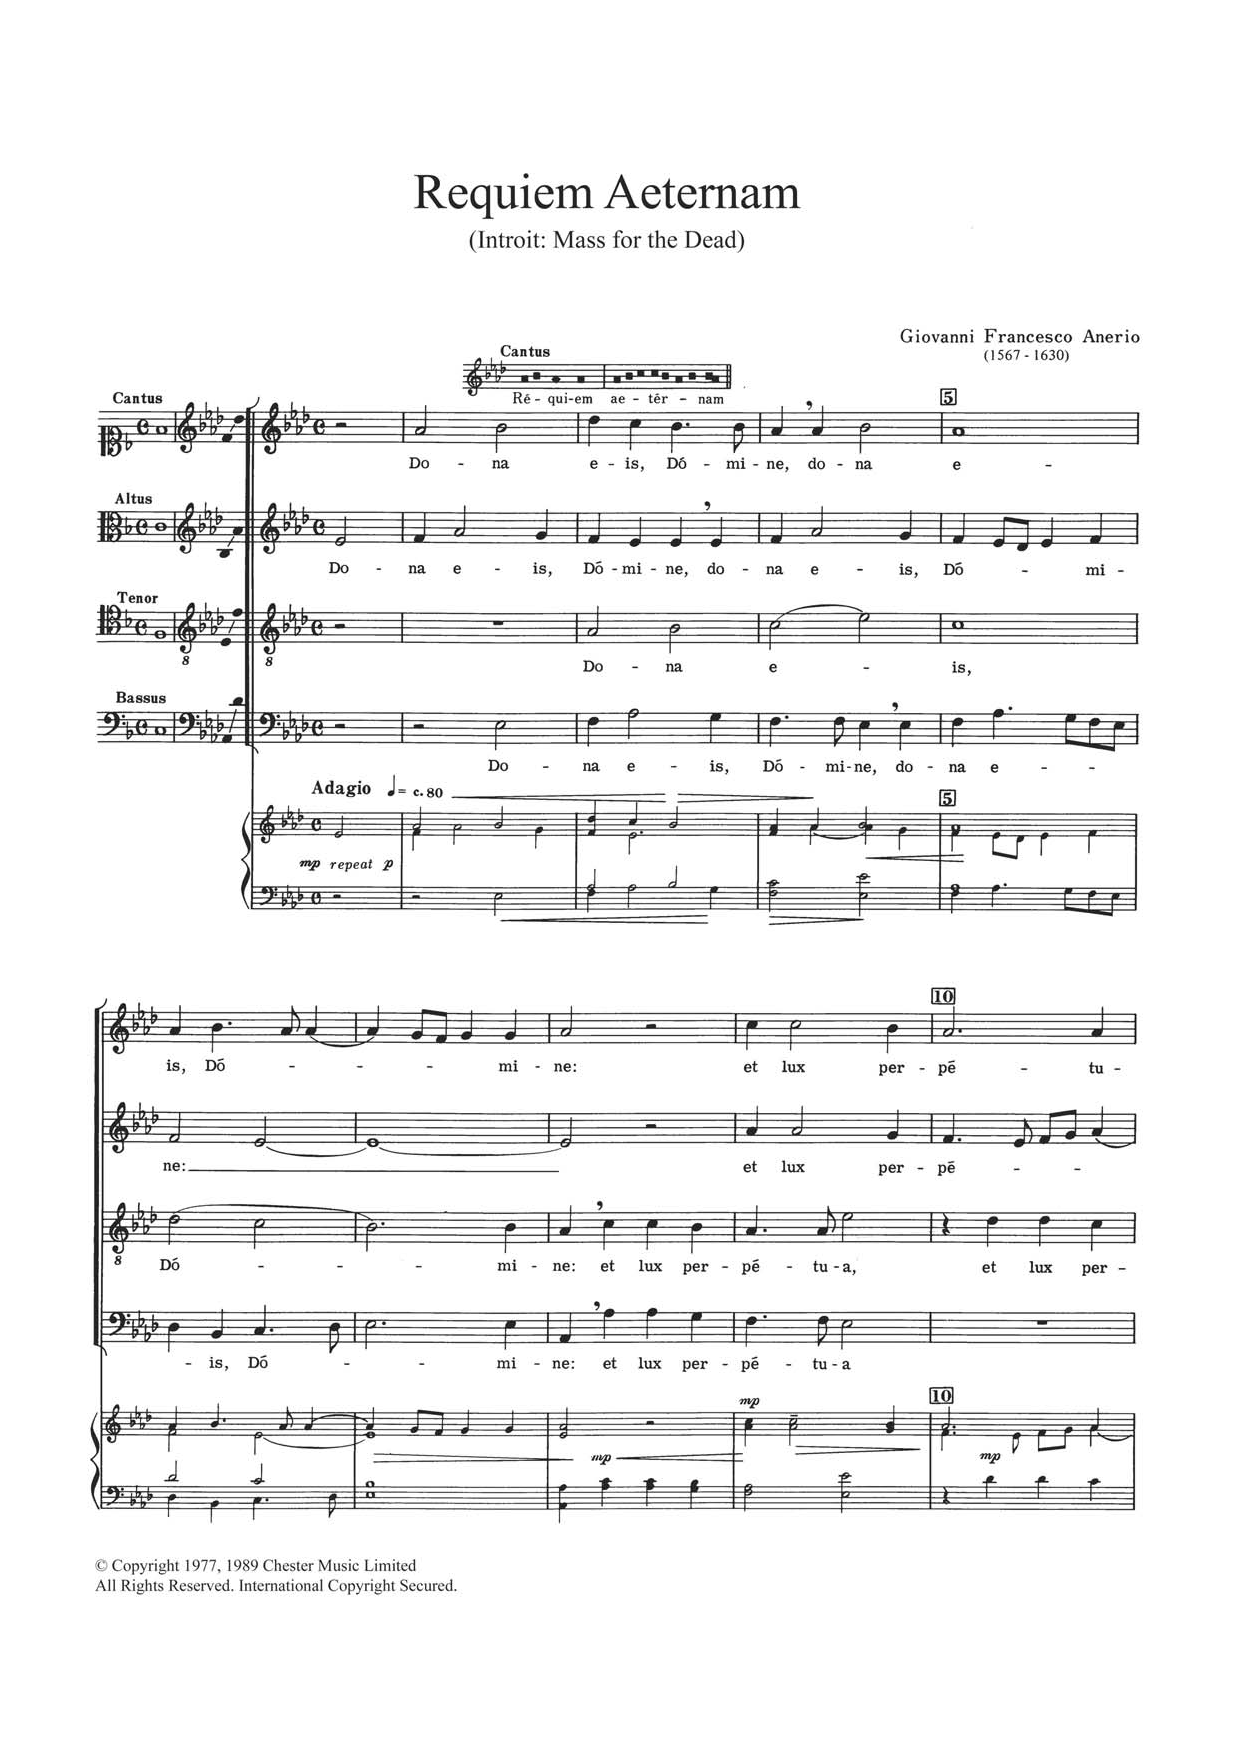 Felice Anerio Requiem Aeternam Sheet Music Notes & Chords for Choir - Download or Print PDF